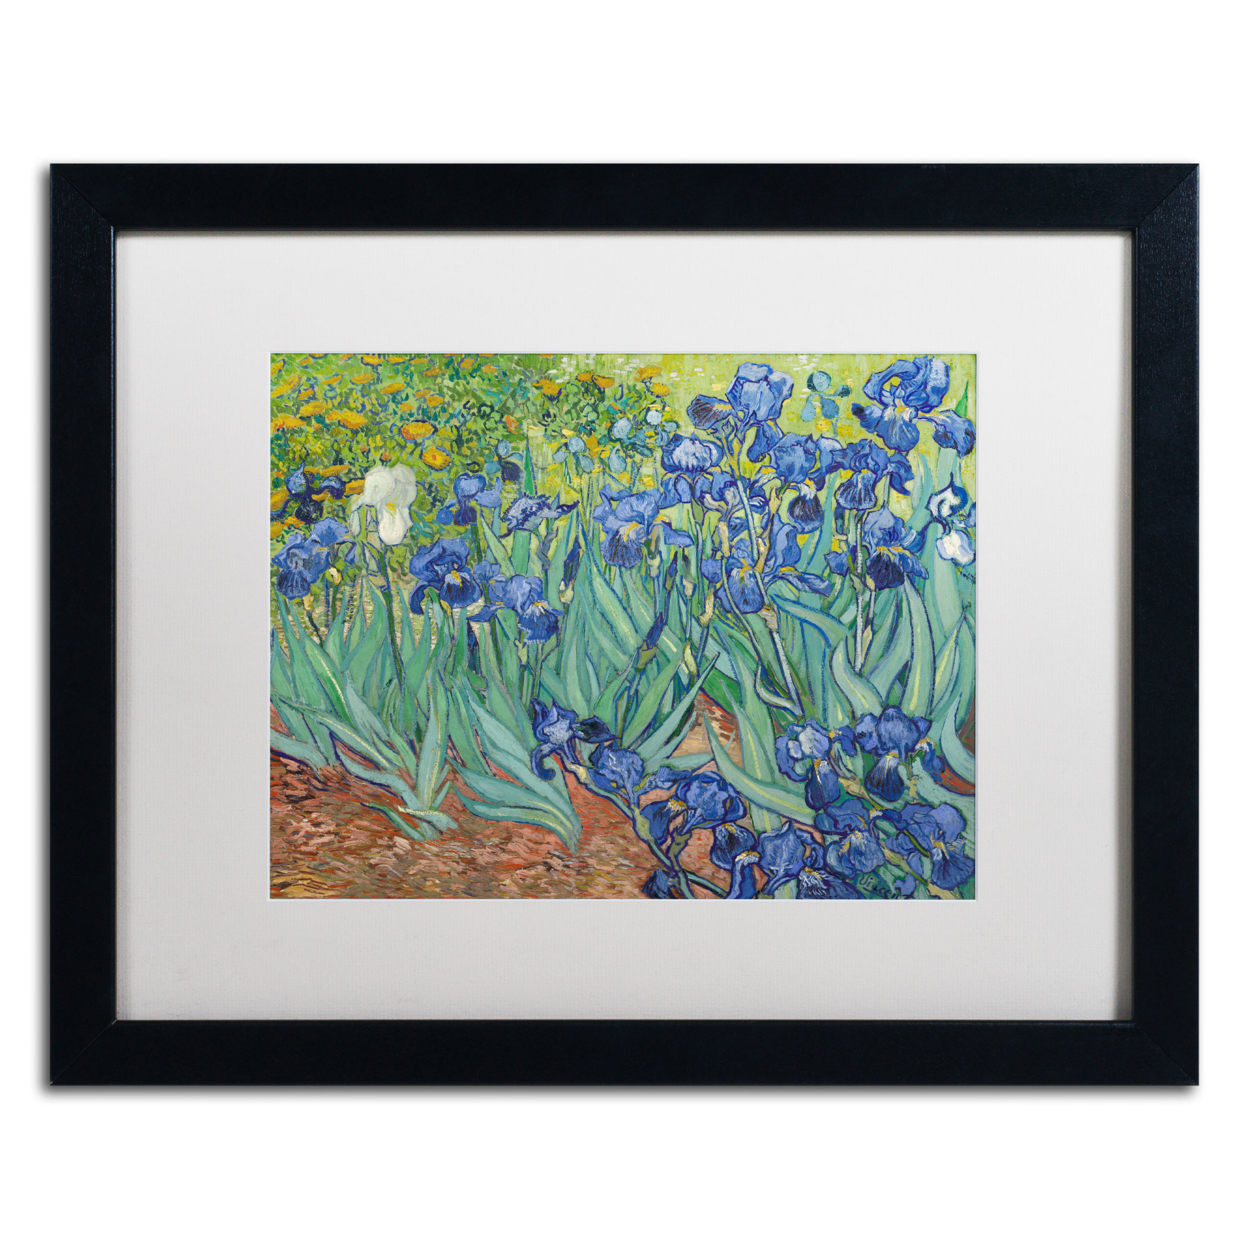 Vincent Van Gogh 'Irises, 1889' Black Wooden Framed Art 18 X 22 Inches